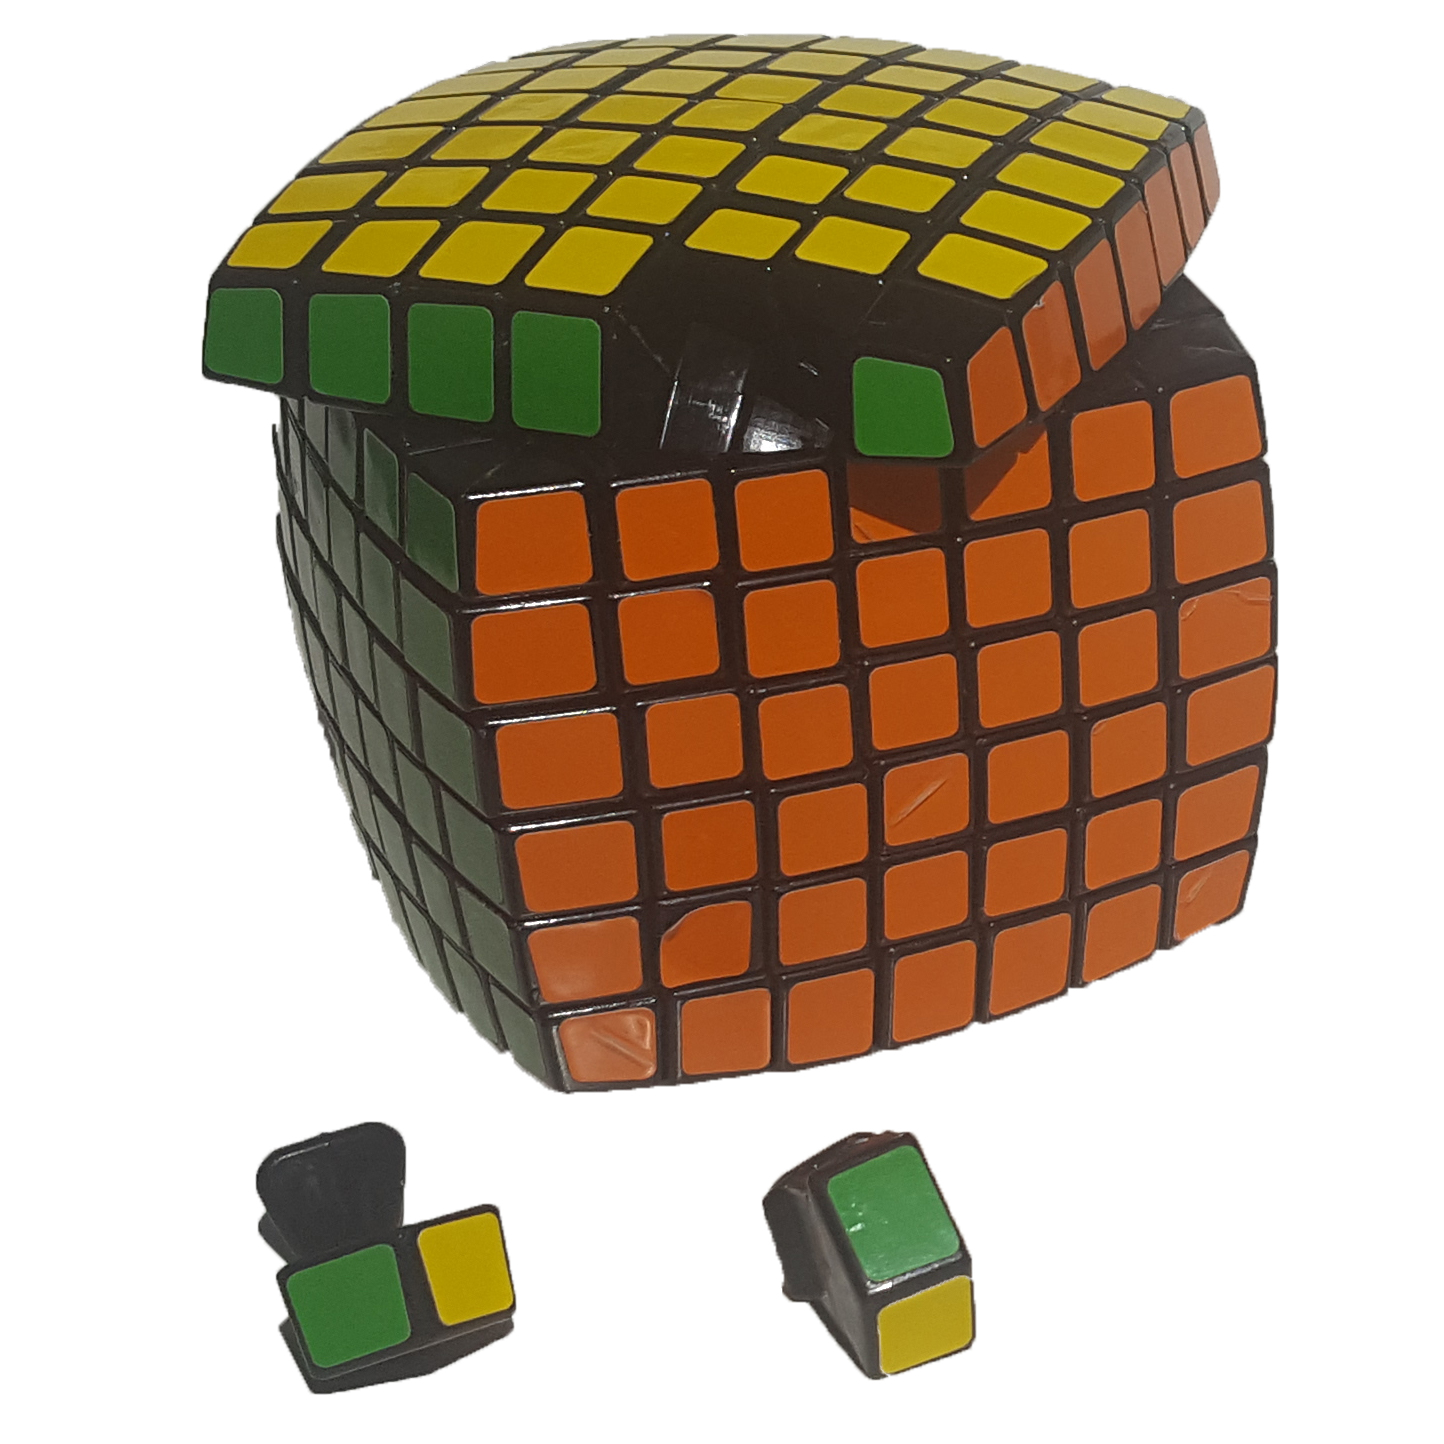 verdes 7x7 rubik's cube popping